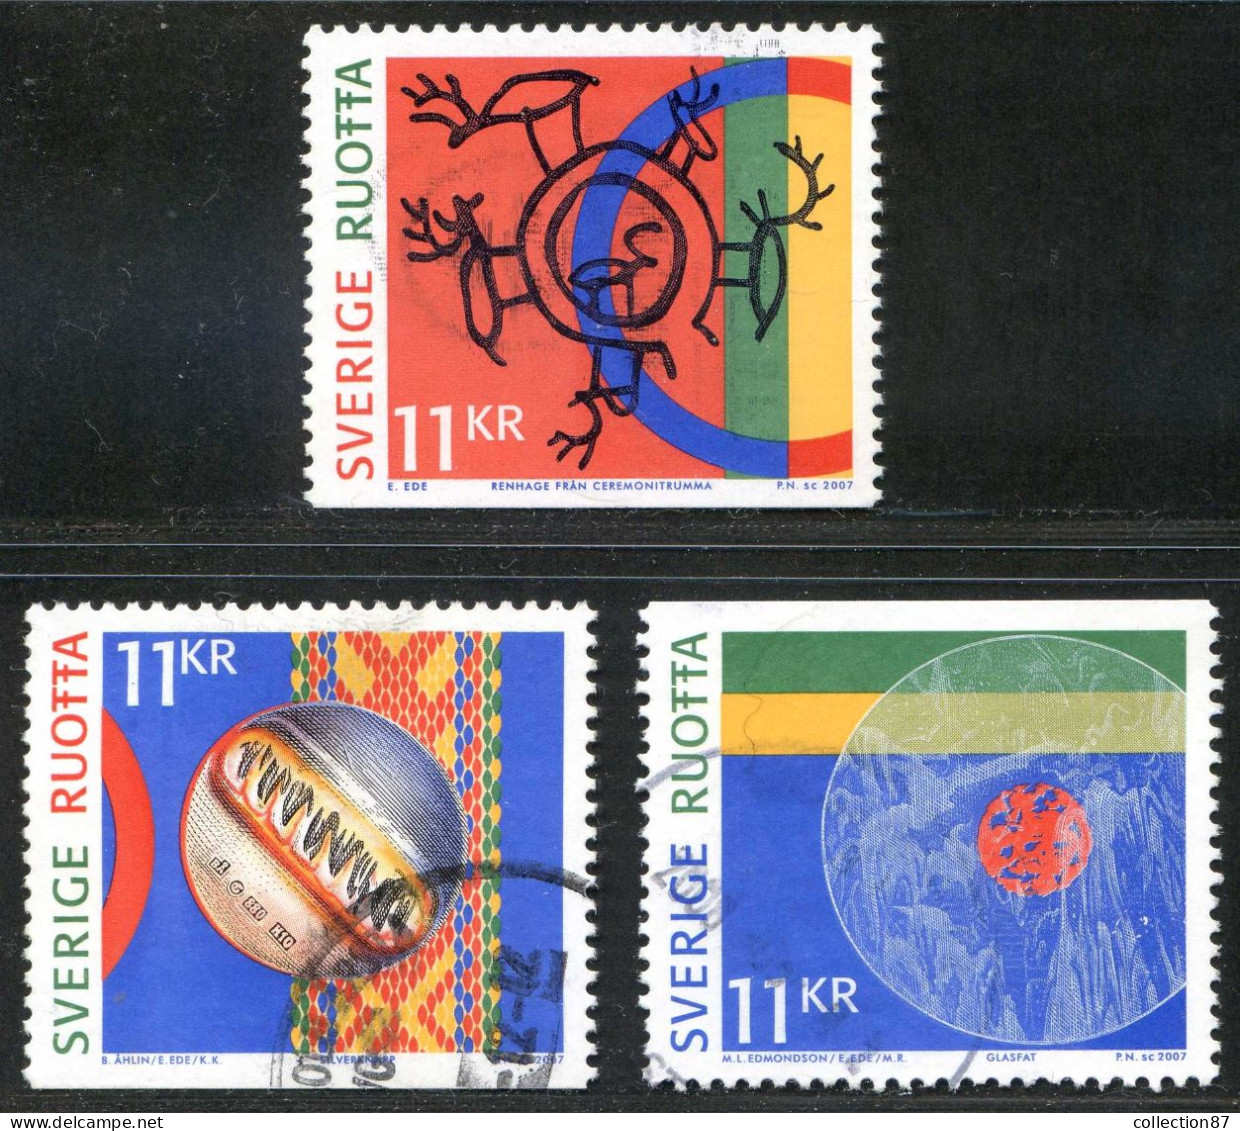 Réf 77 < SUEDE Année 2007 < Yvert N° 2597 à 2599 Ø Used < SWEDEN < Culture Des Samis En Laponie - Used Stamps